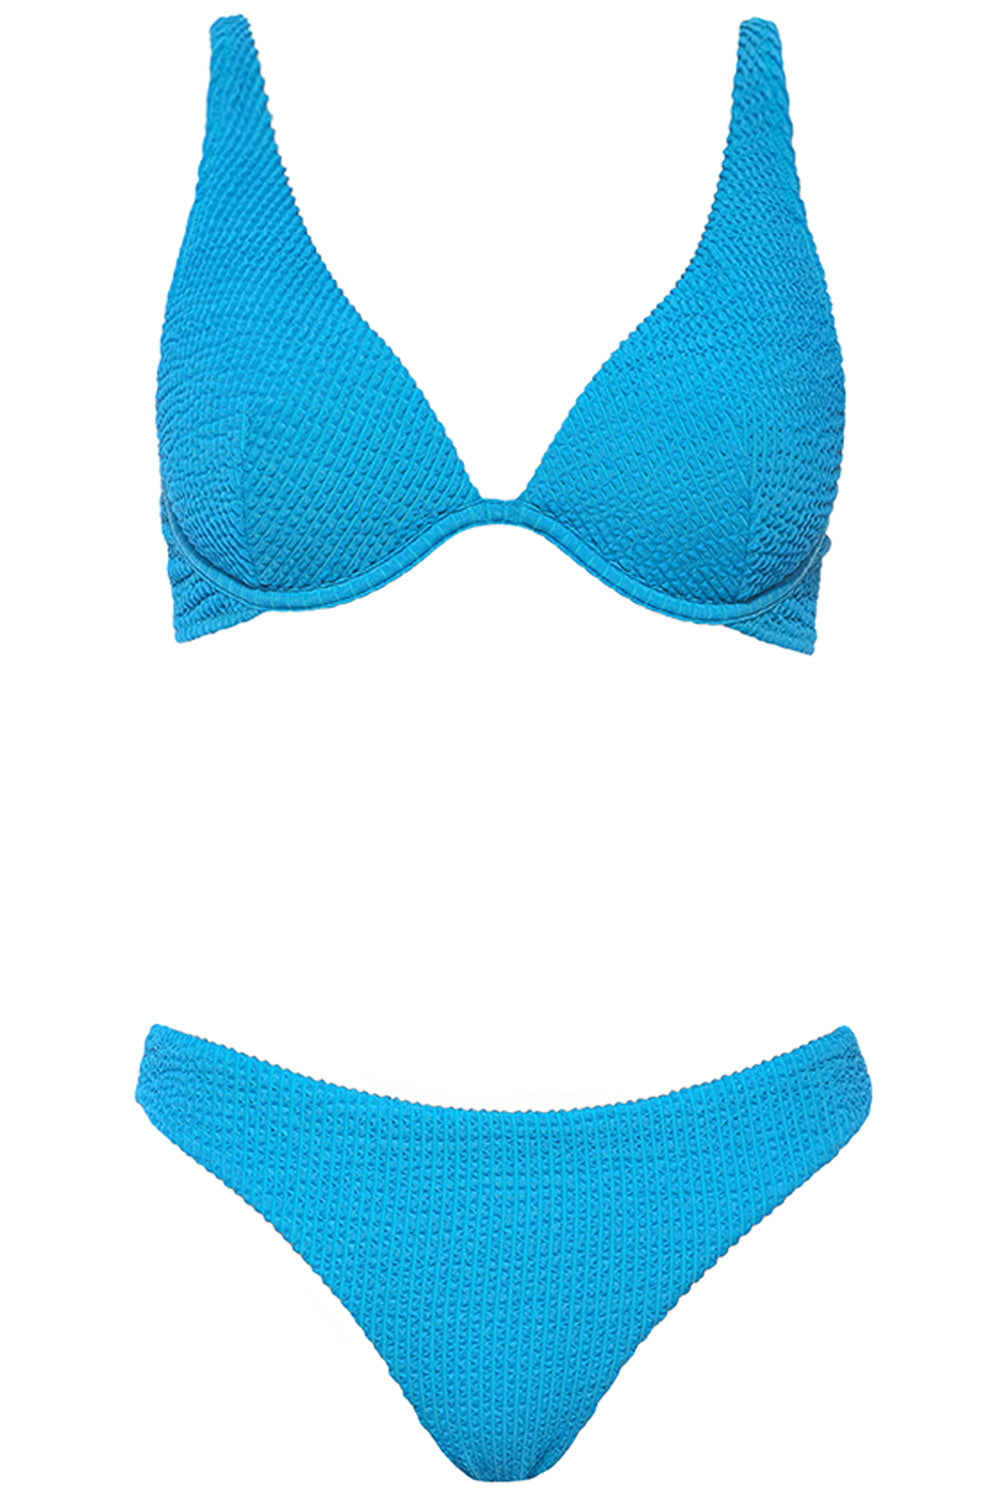 Bermuda Bikini Crinkle Blue Set on white background front view.